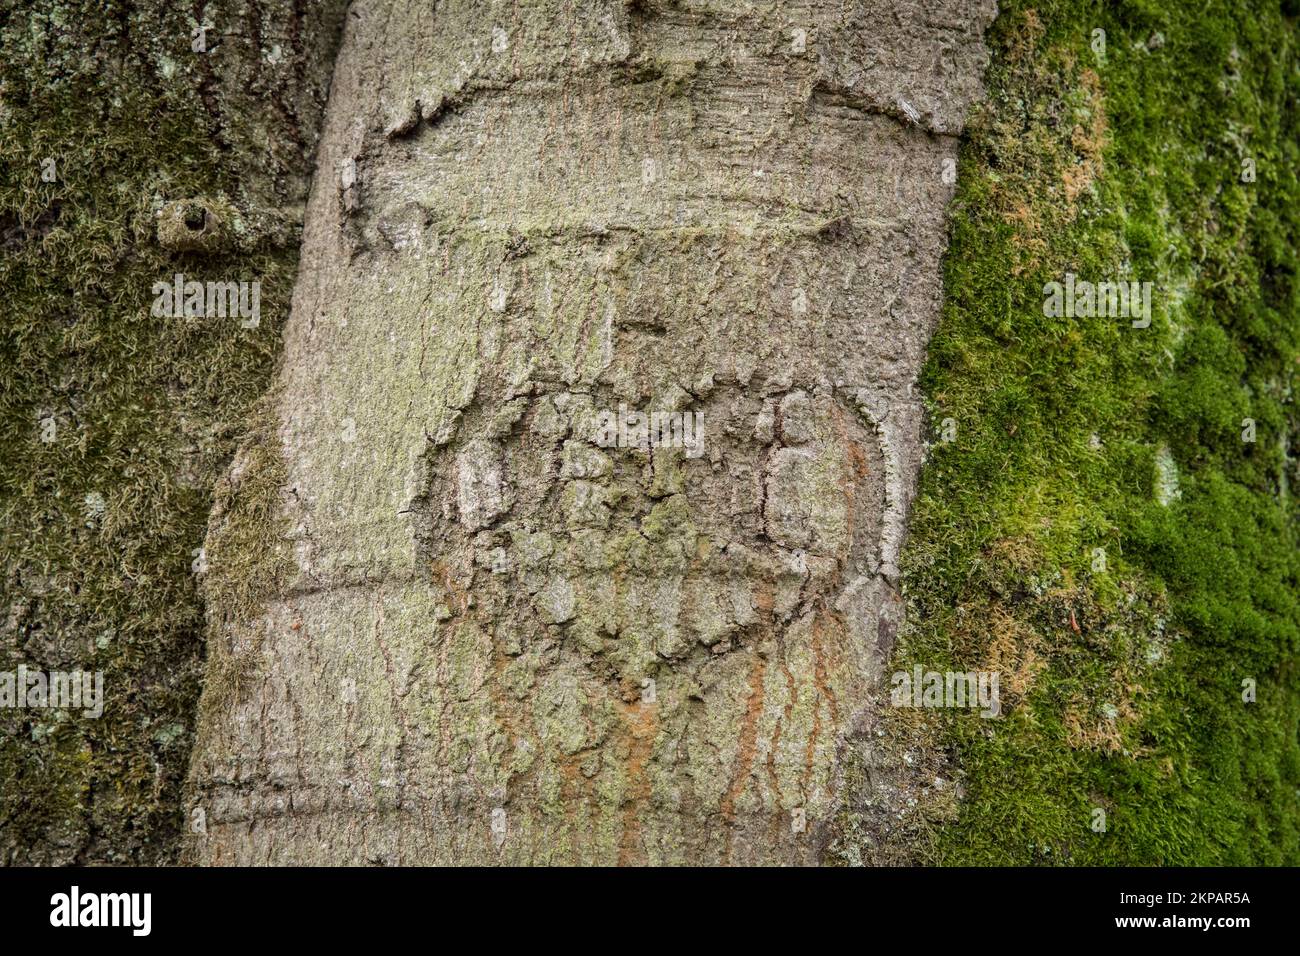 carved heart in the bark of a tree, Cologne, Germany. Herz in einer Rinde eines Baumes, Koeln, Deutschland. Stock Photo